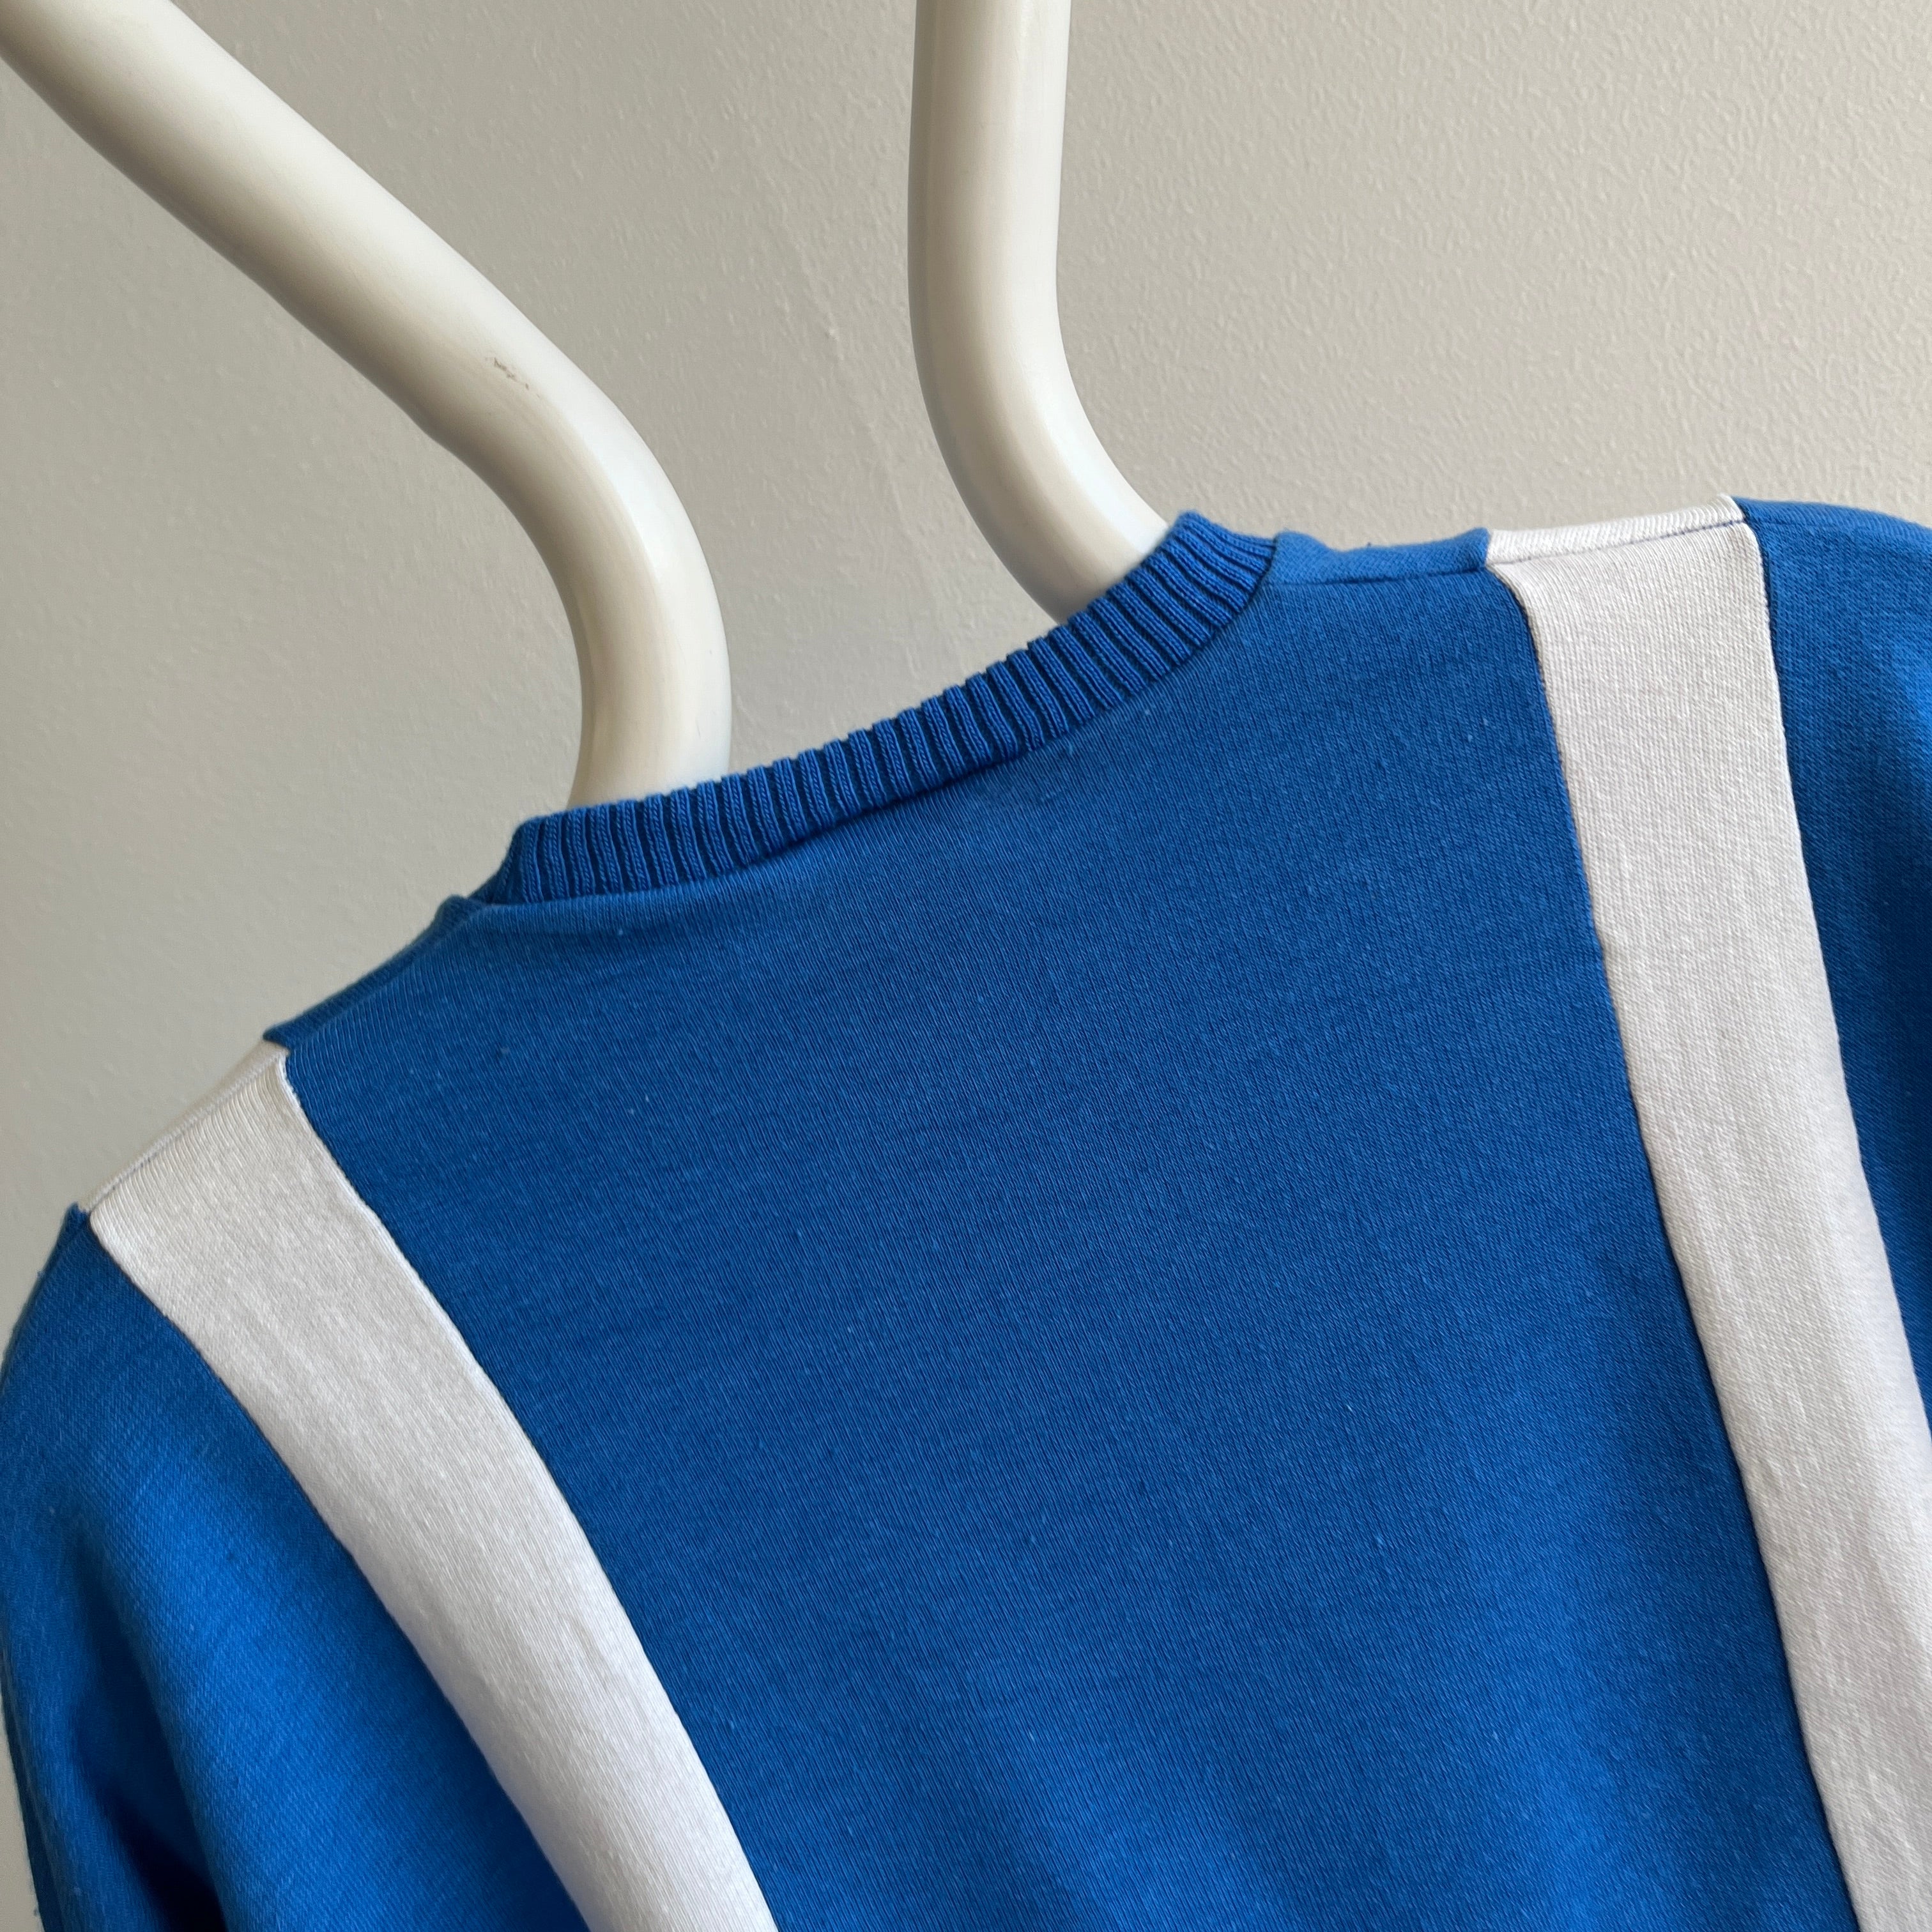 1970s Mod Color Block Sweatshirt - Made in France